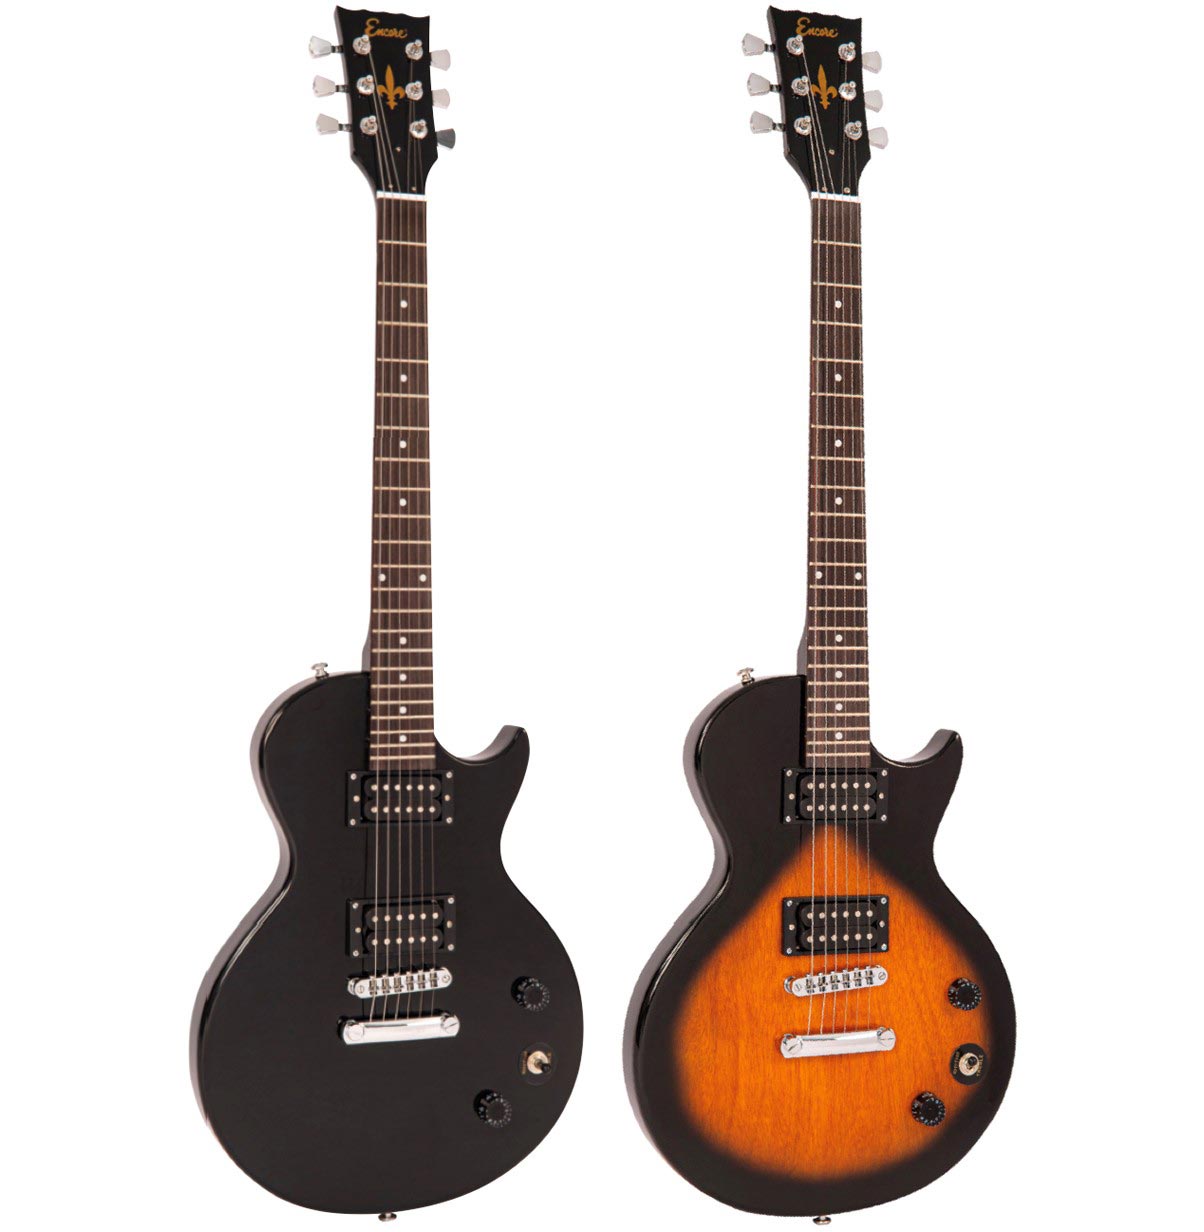 Encore Blaster Series electric guitars